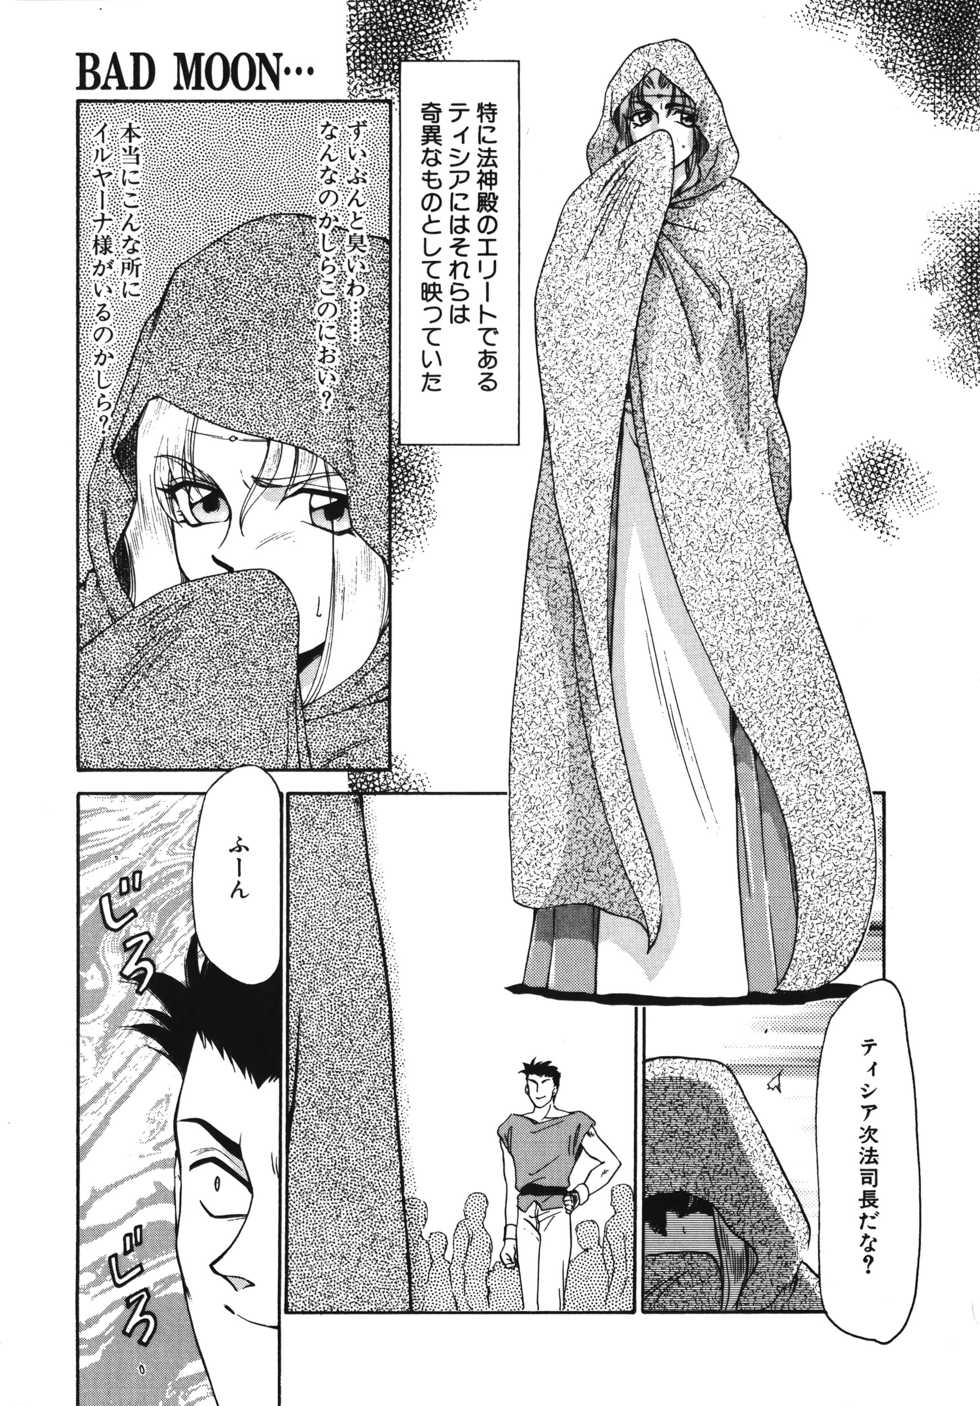 [Taira Hajime] Bad Moon... - Page 17